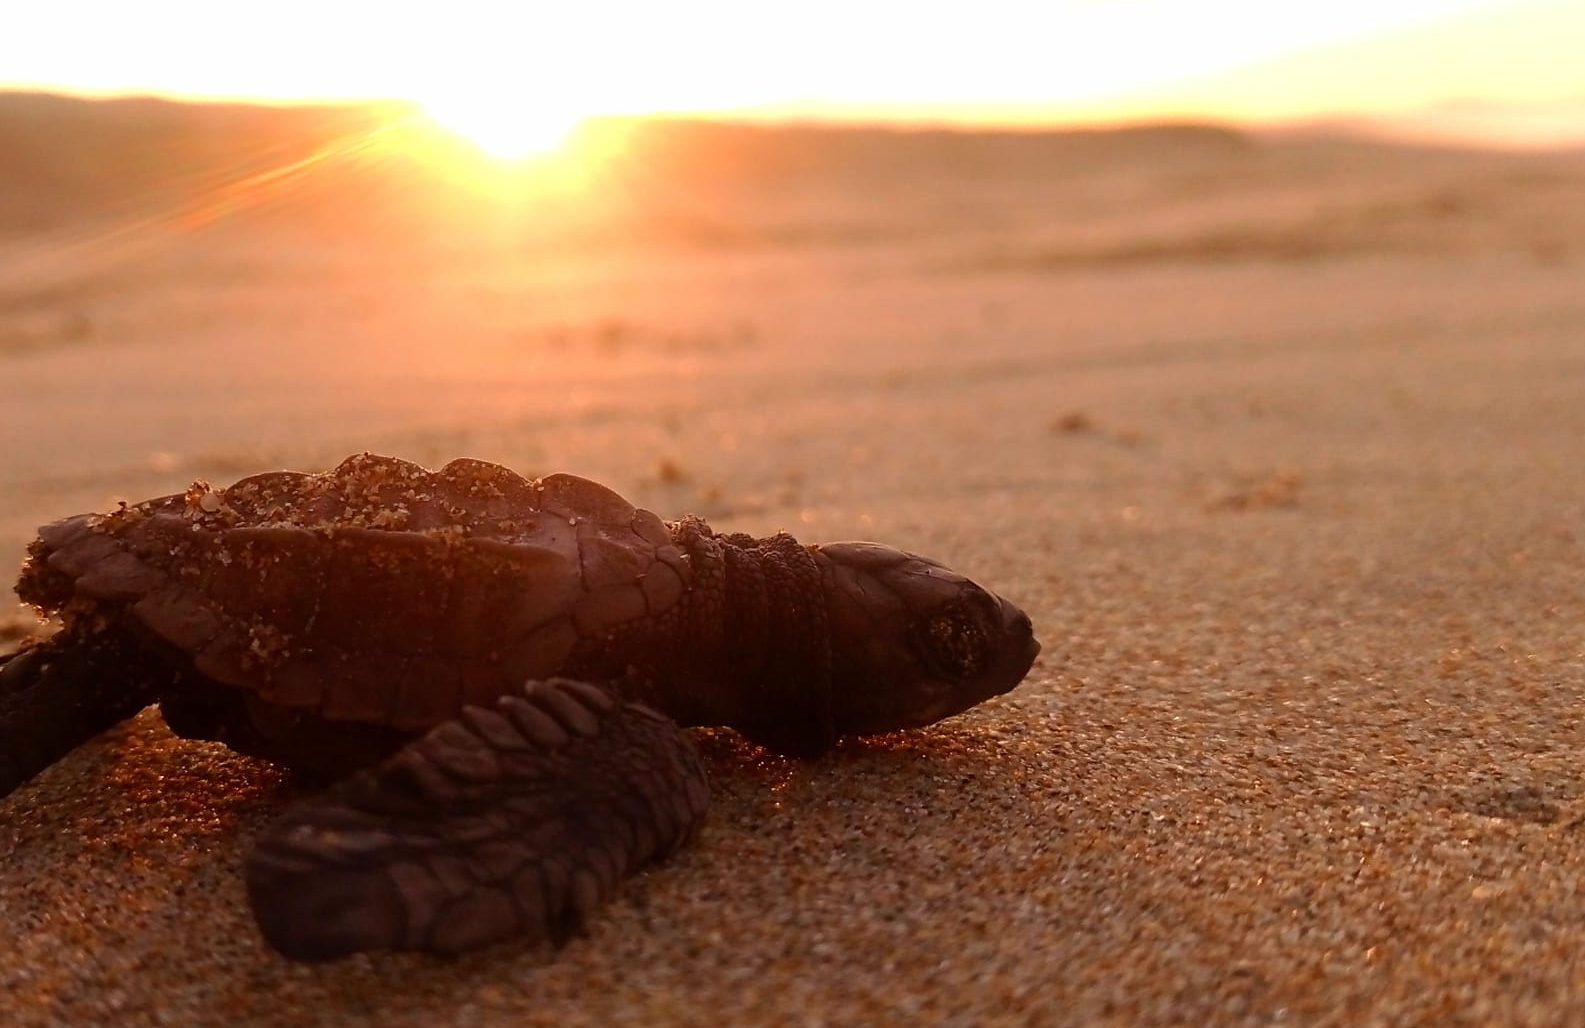 #TurtleSays – Comunicación desde el cascarón / Communication from the Eggshell